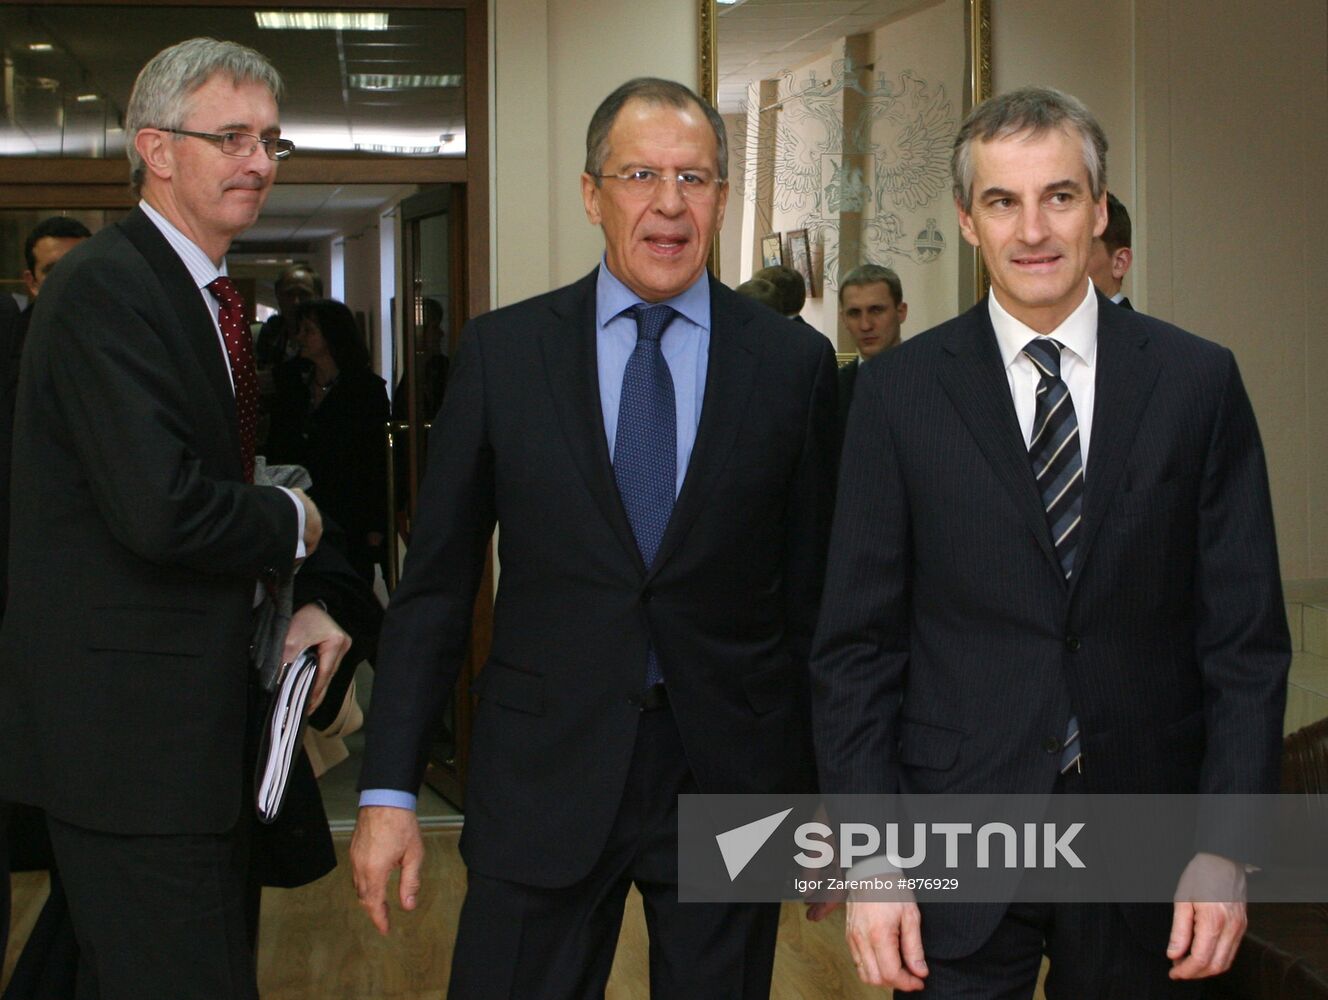 Meeting of Sergei Lavrov and Jonas Gahr Stere in Kaliningrad